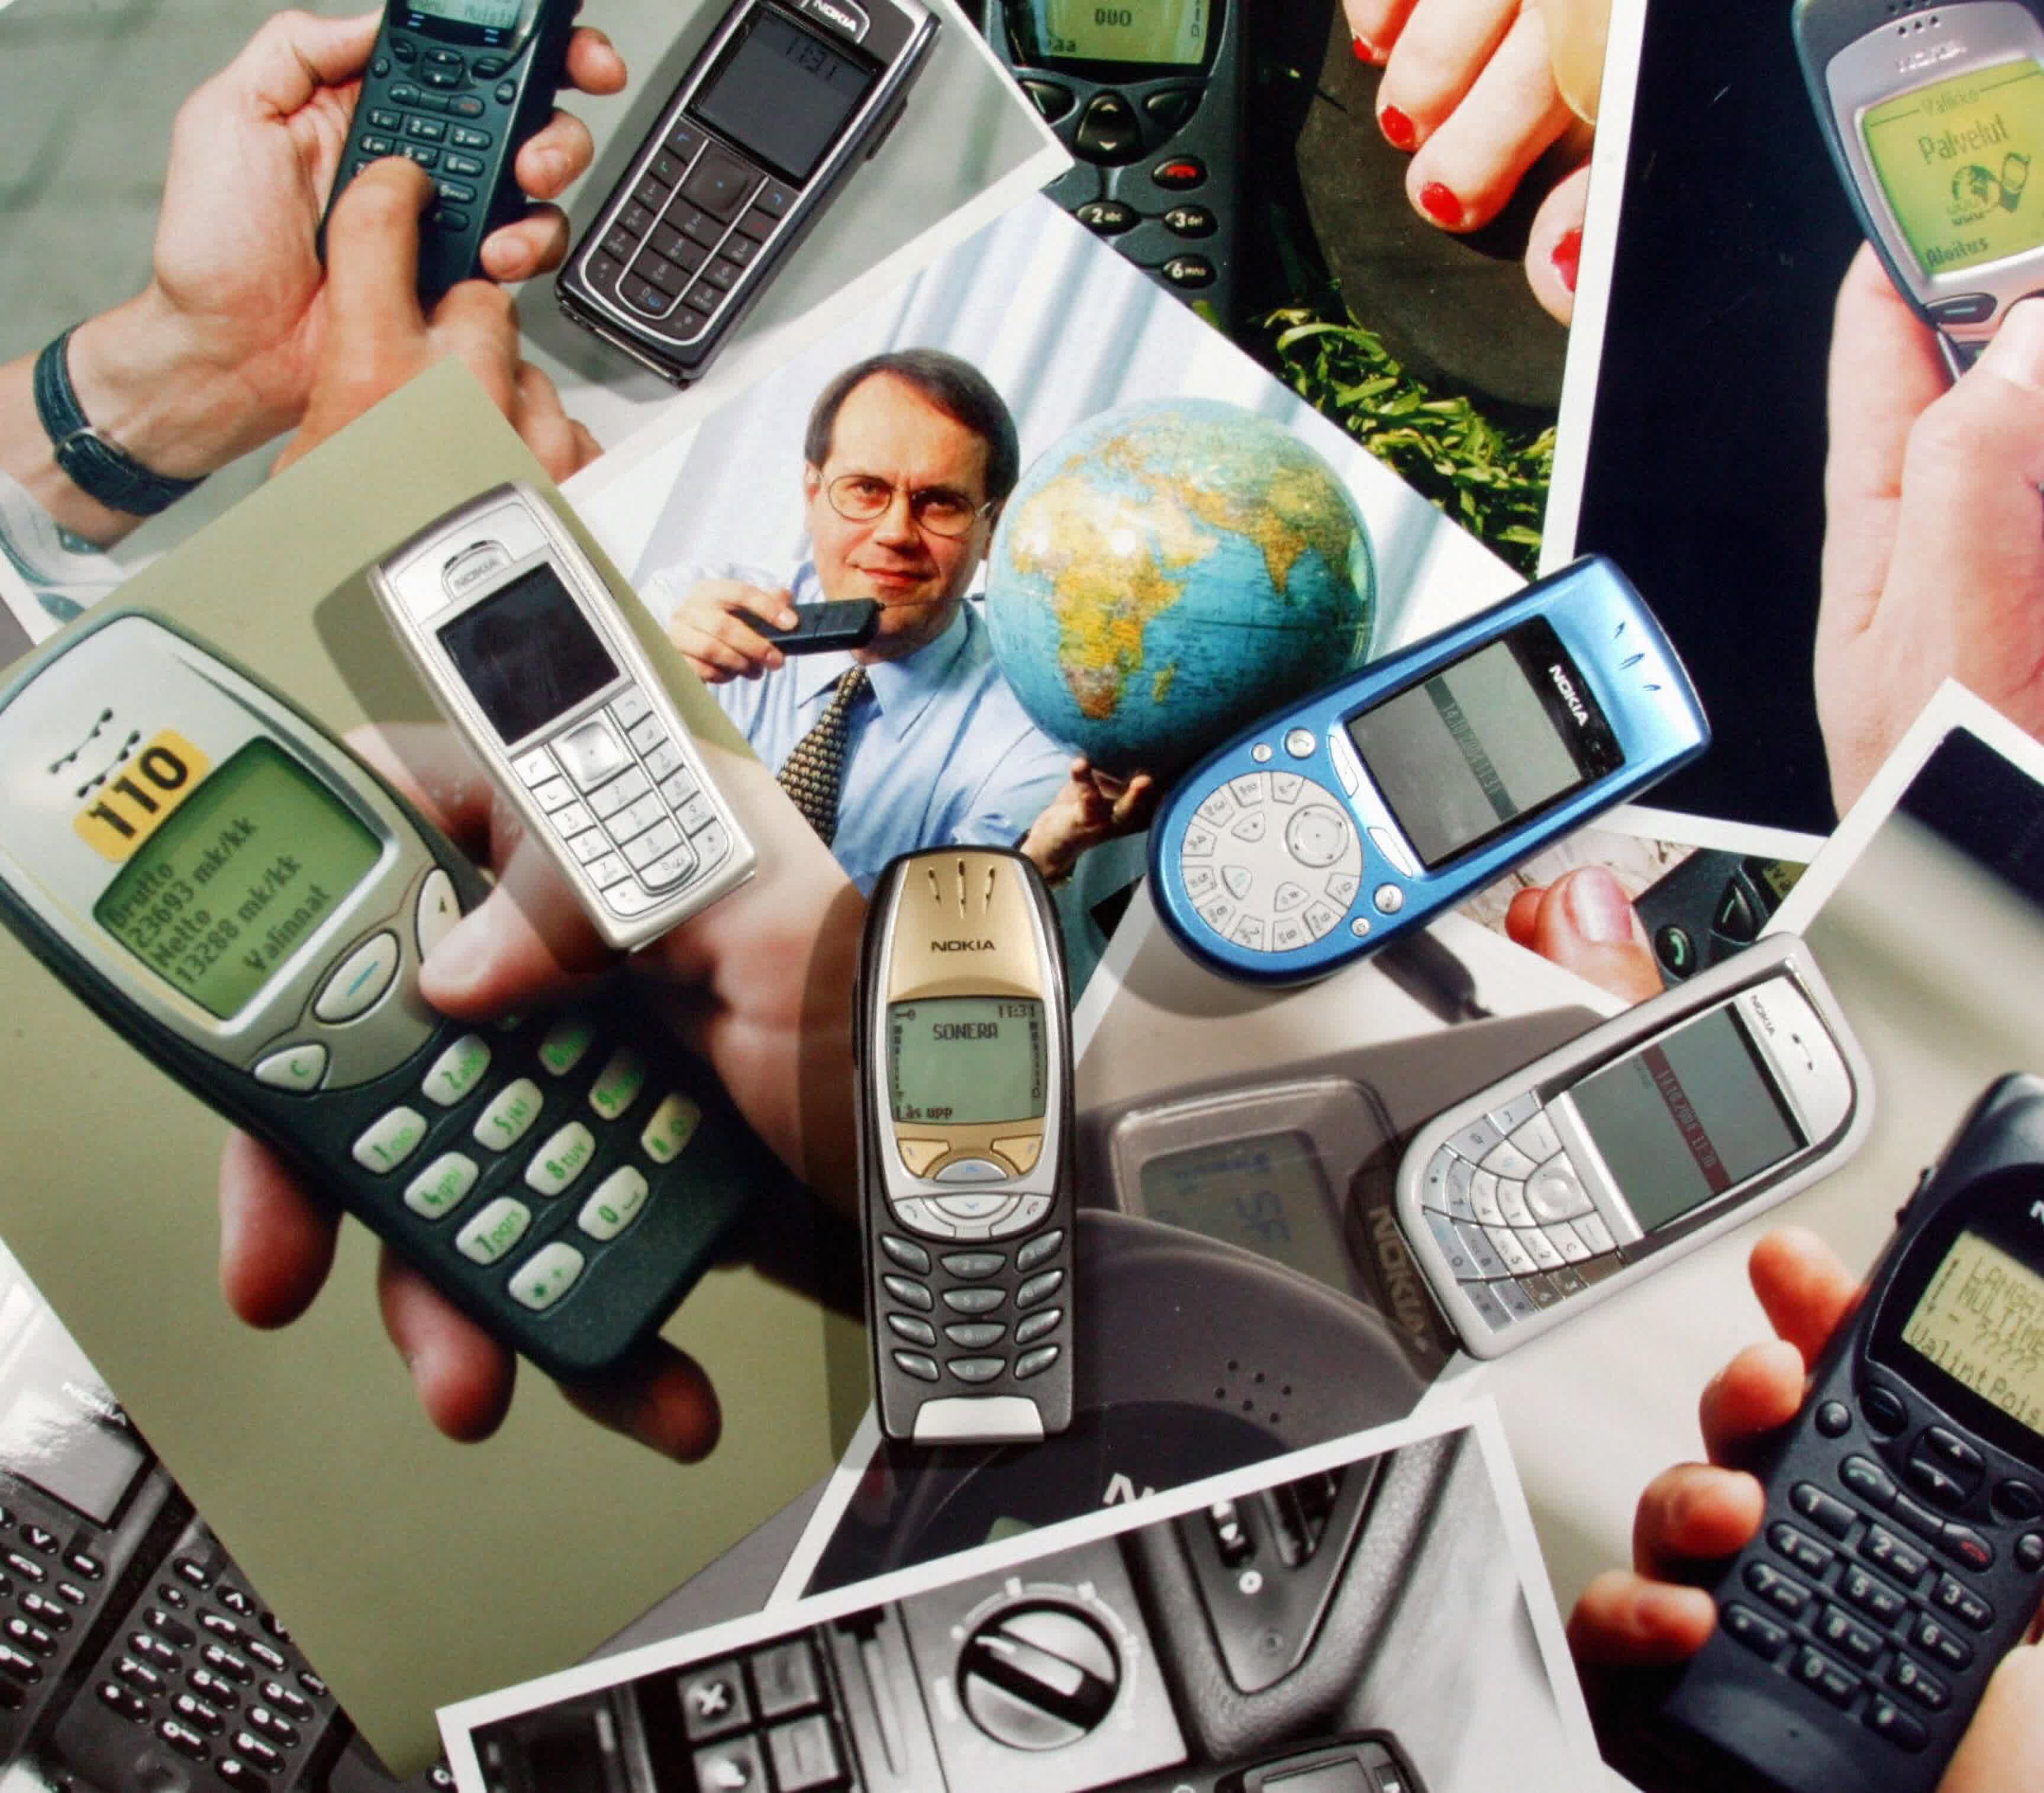 Nokia: The Story of the Once-Legendary Phone Maker - dailynewsera - Technology - Daily News Era